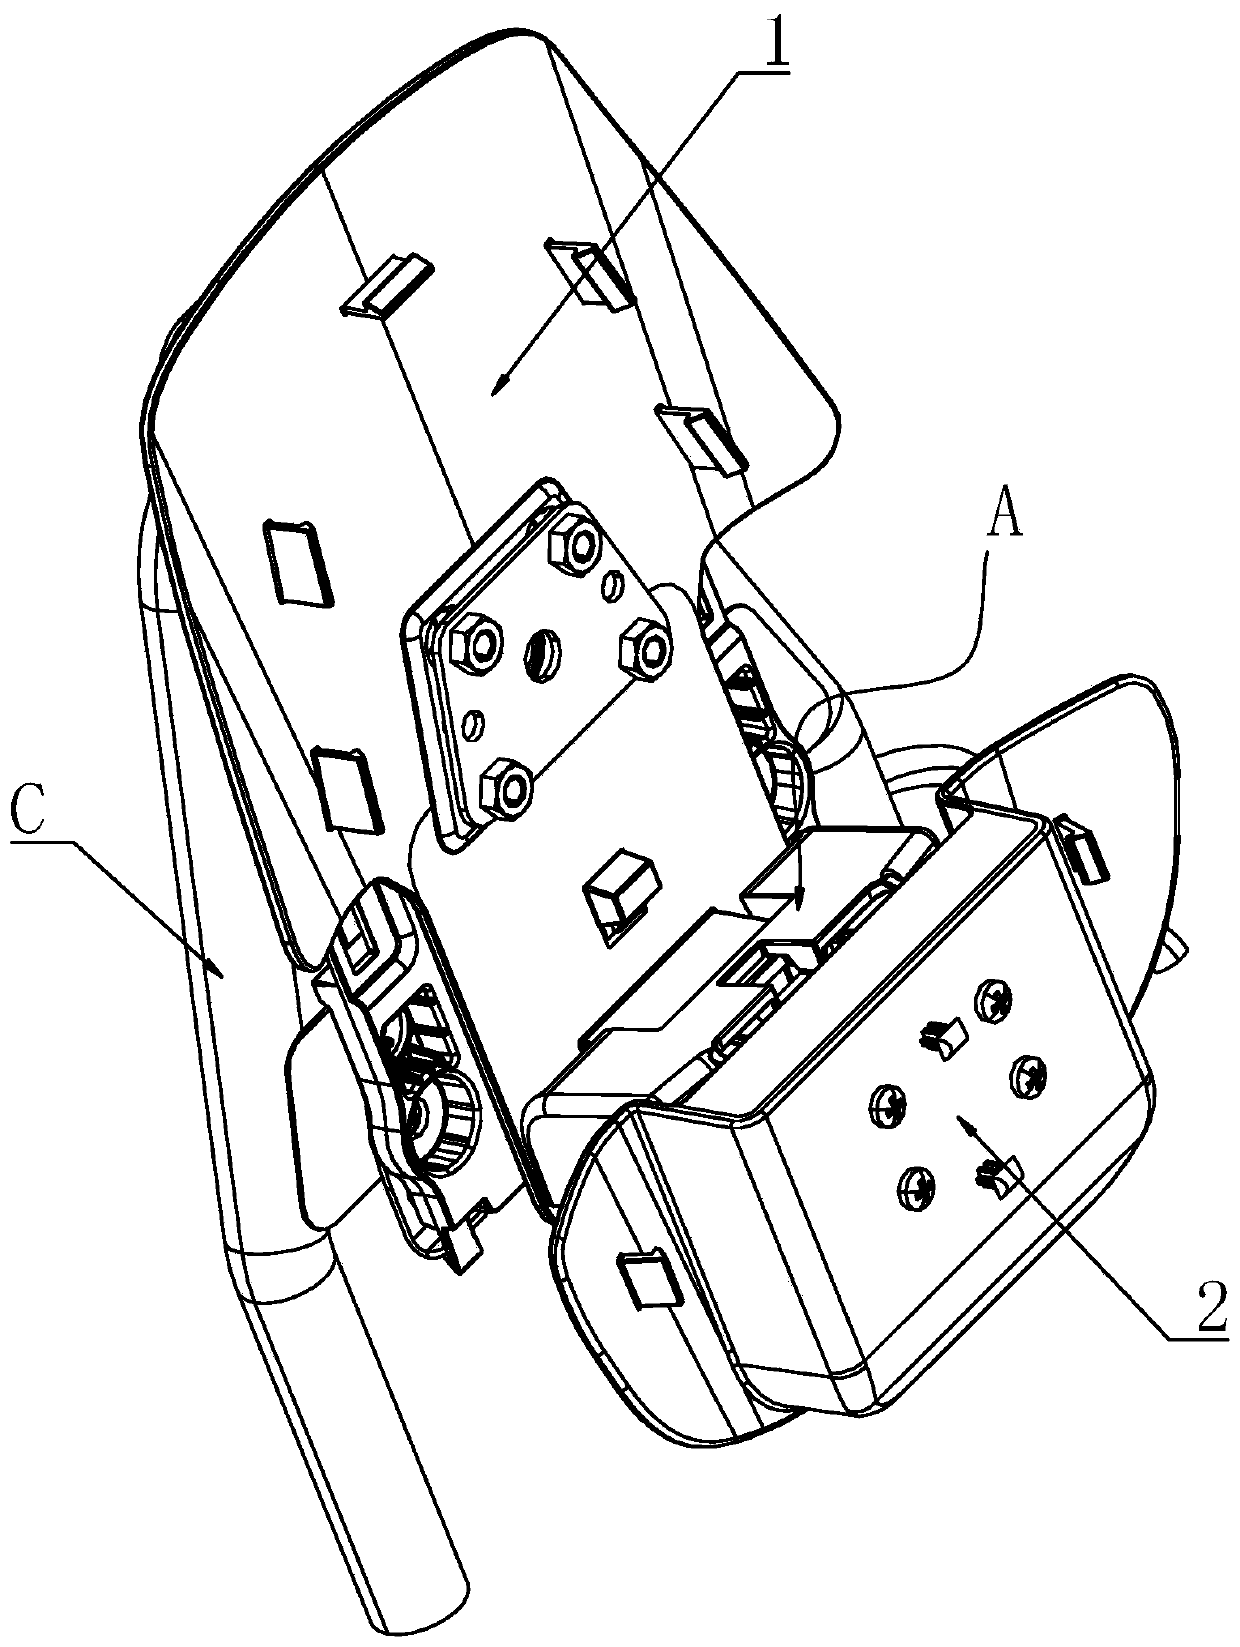 Automobile seat headrest with neck collar